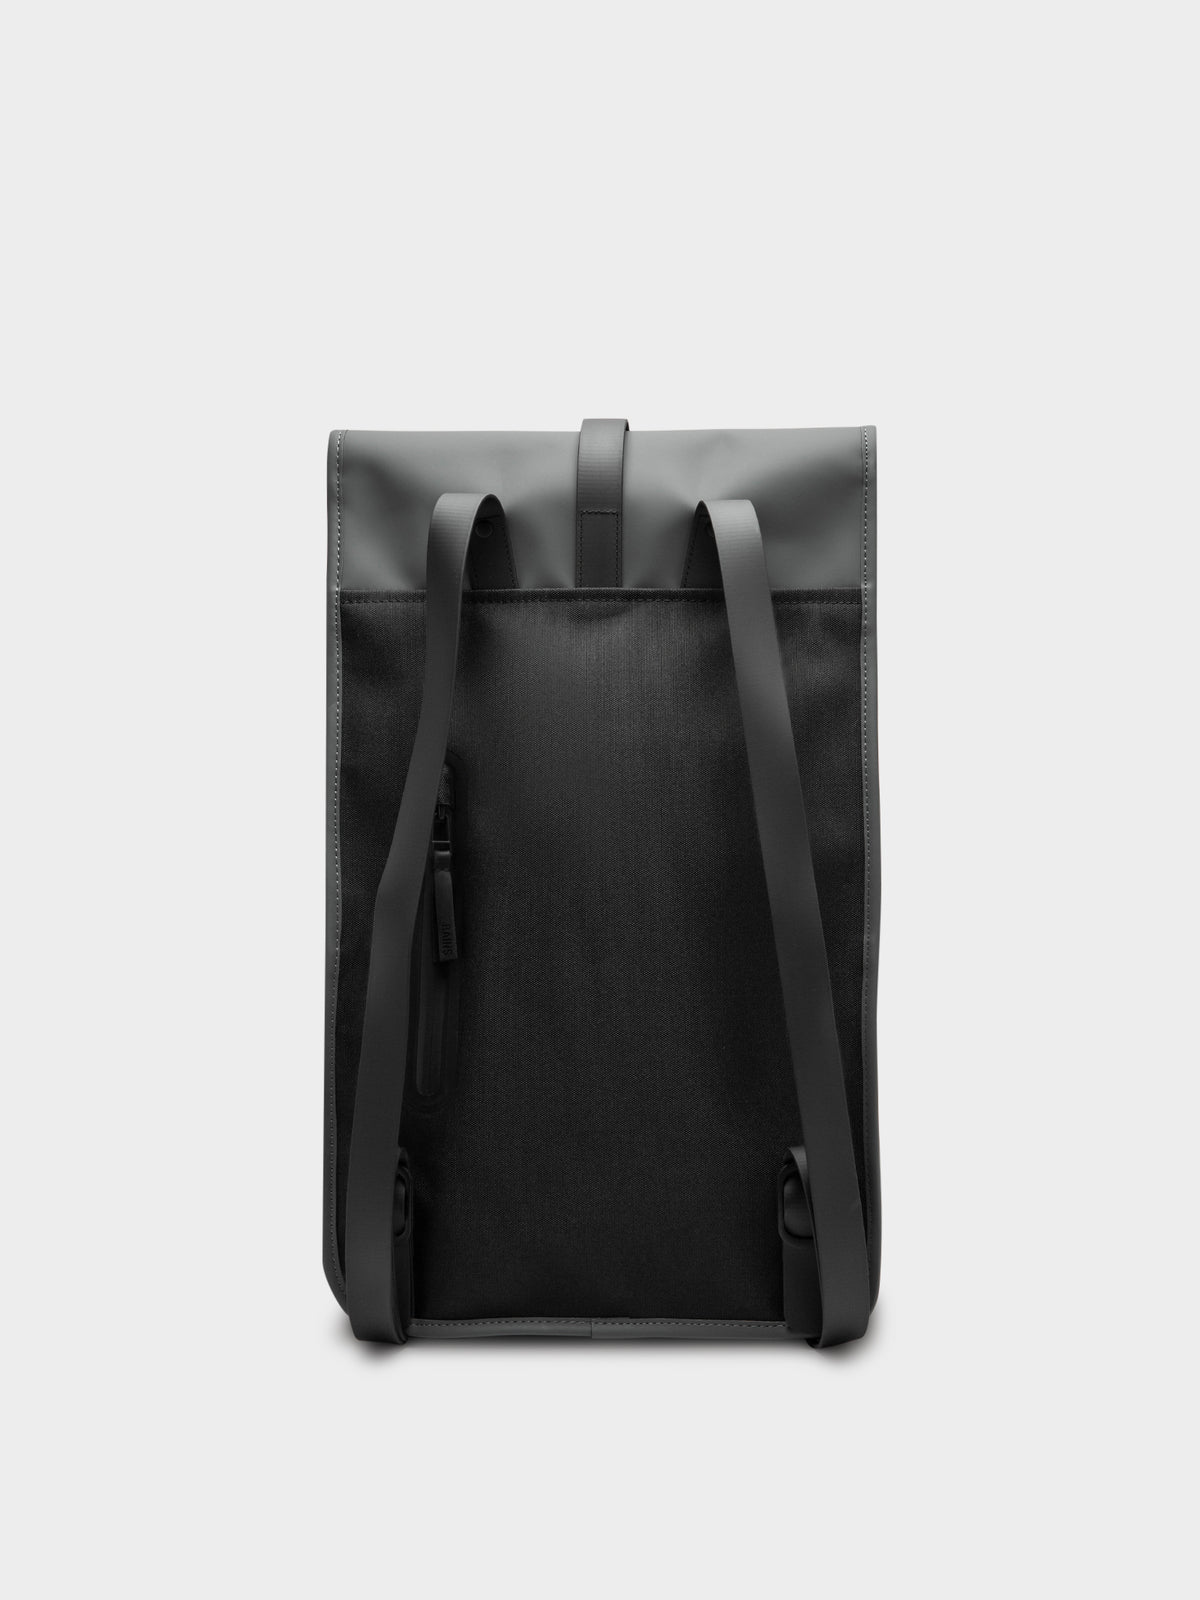 Essential Backpack in Slate